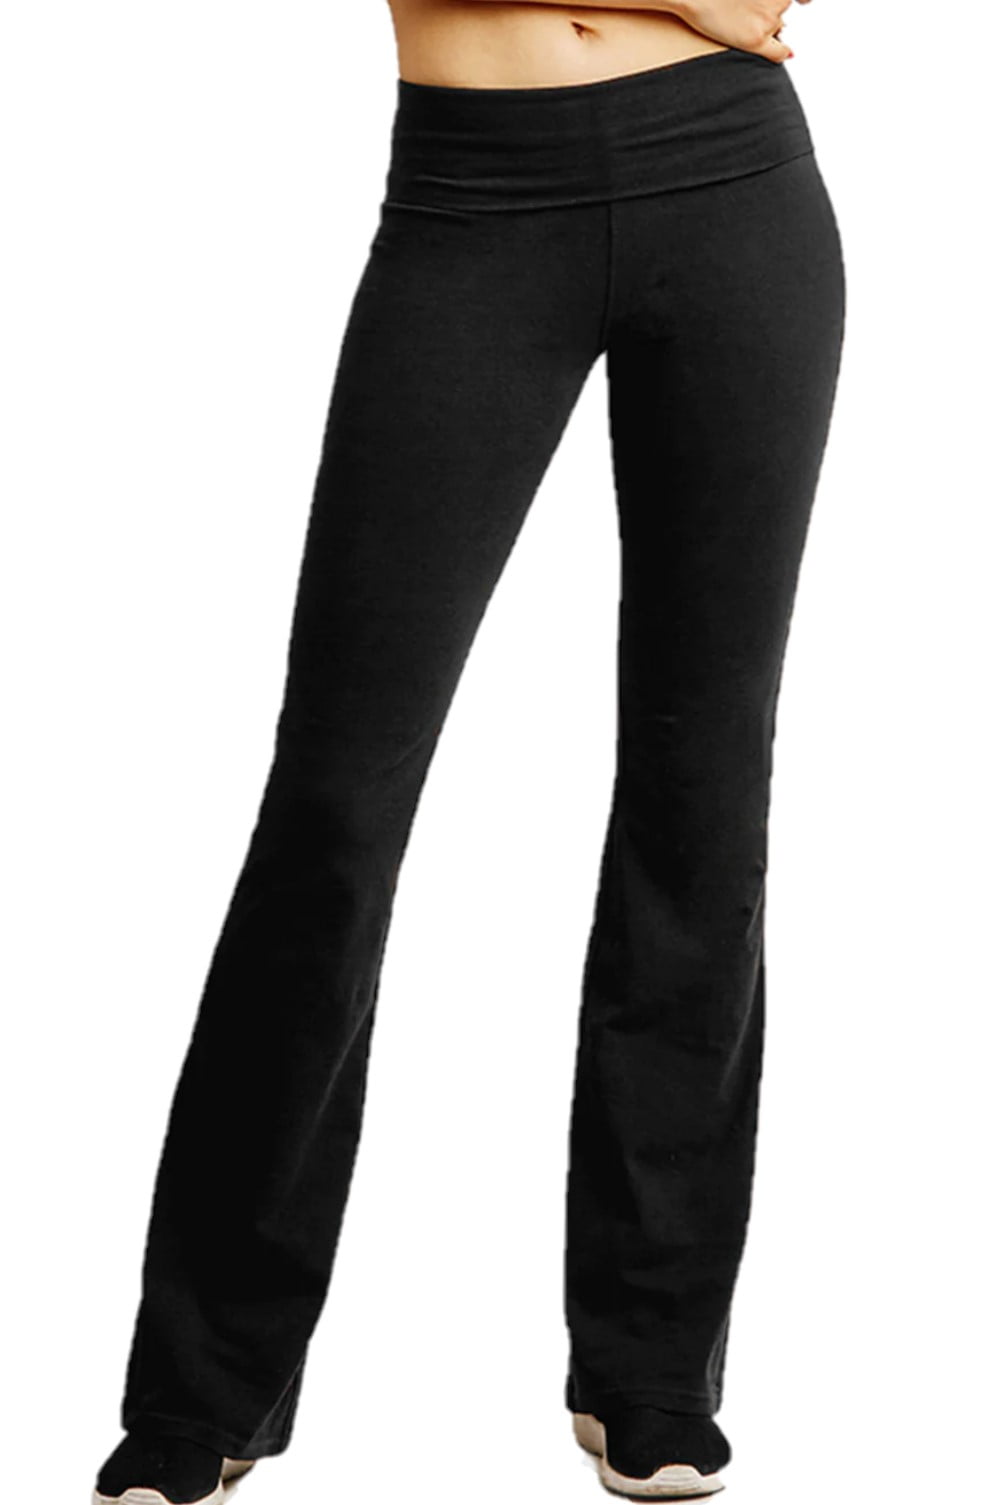 Women Cotton Bootcut Wide Waist-band Workout Bootleg Yoga Pants, Black  Large, 1 Pack